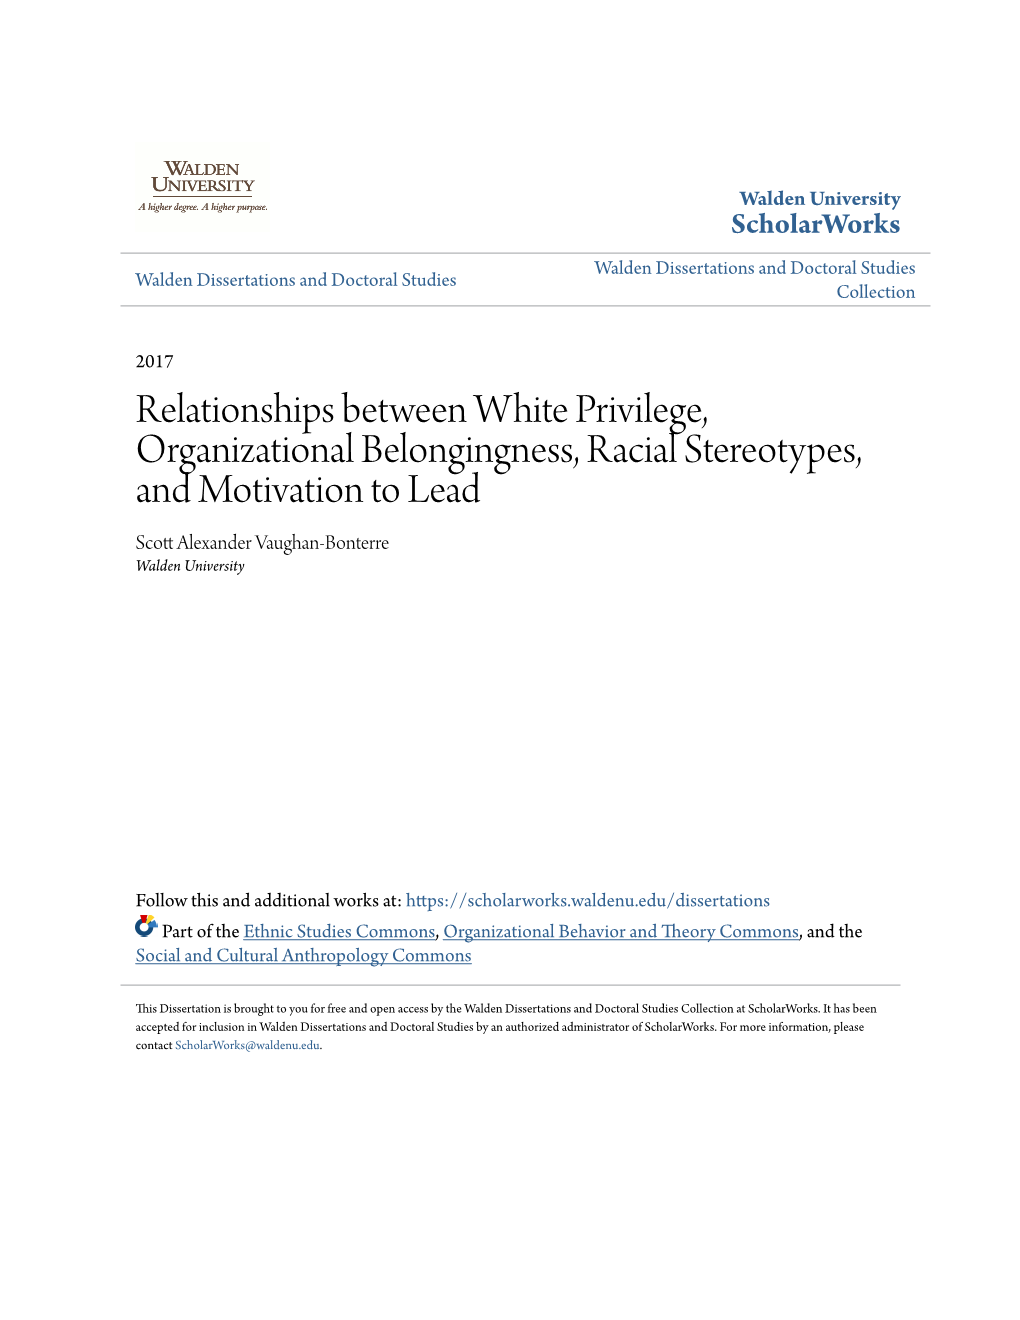 Relationships Between White Privilege, Organizational Belongingness, Racial Stereotypes, and Motivation to Lead Scott Alexander Vaughan-Bonterre Walden University